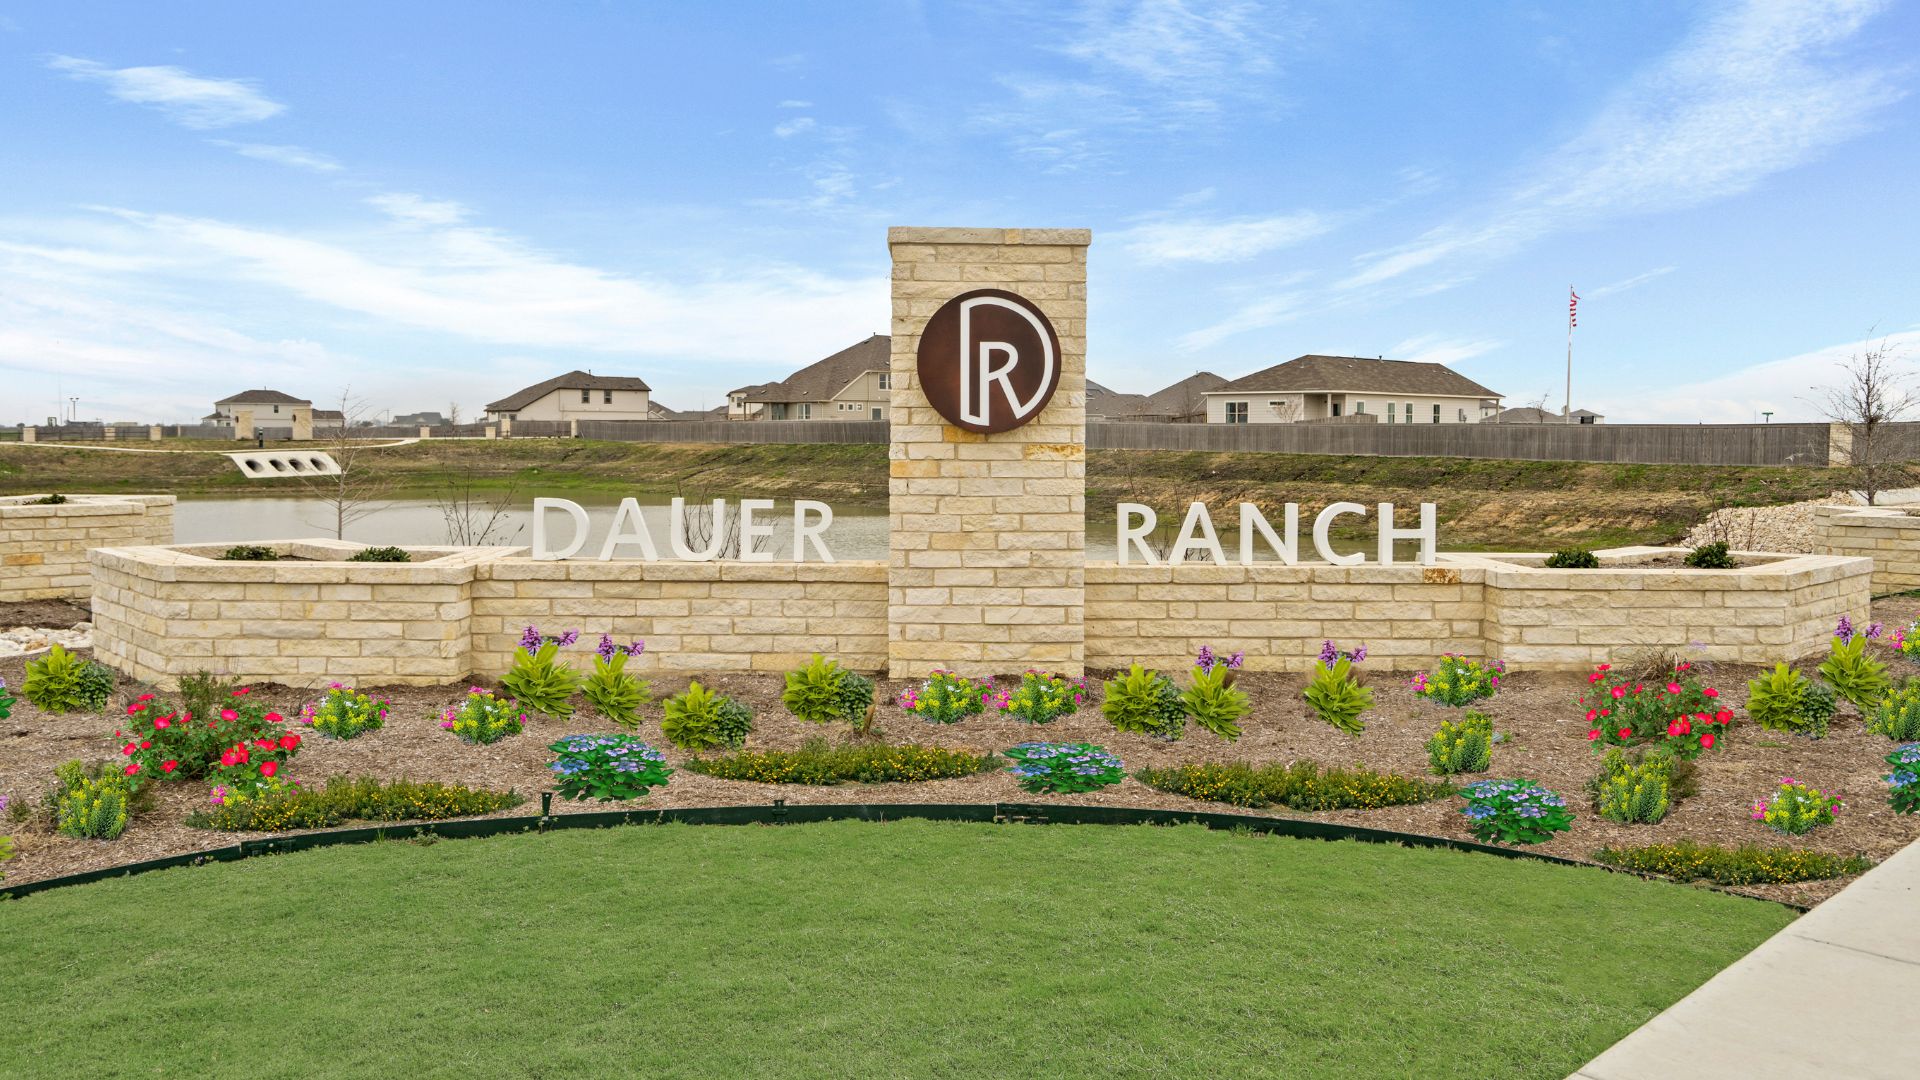 DauerRanchMonumnetLogo.jpg:Dauer Ranch Entrance Monument